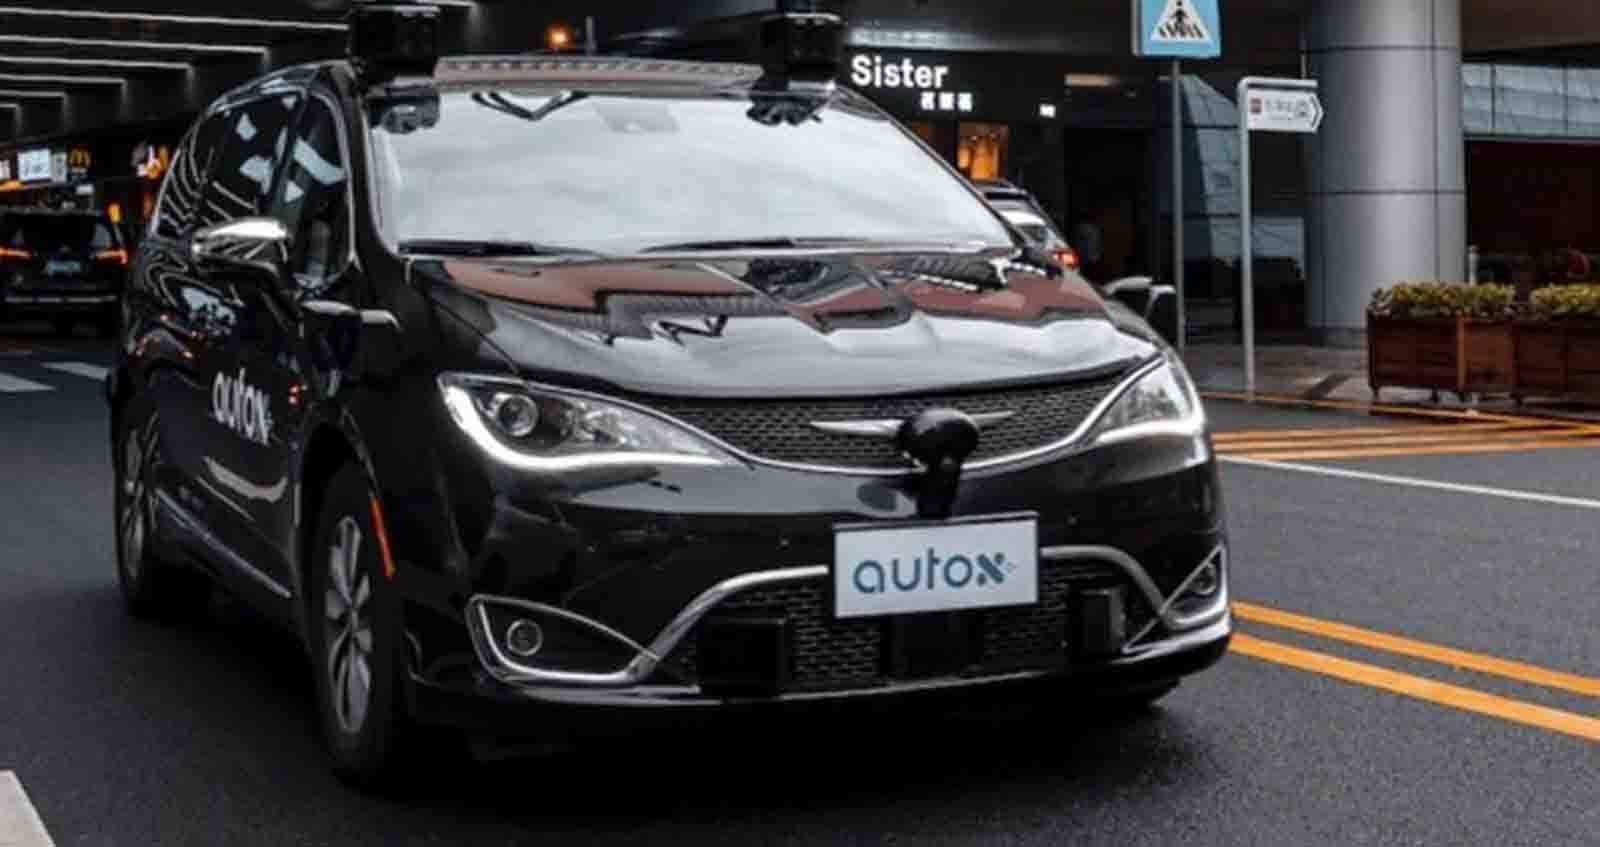 AutoX แท็กซี่ขับขี่อัตโนมัติ ครอบคลุมพื้นที่ 1,000 ตารางกิโลเมตร